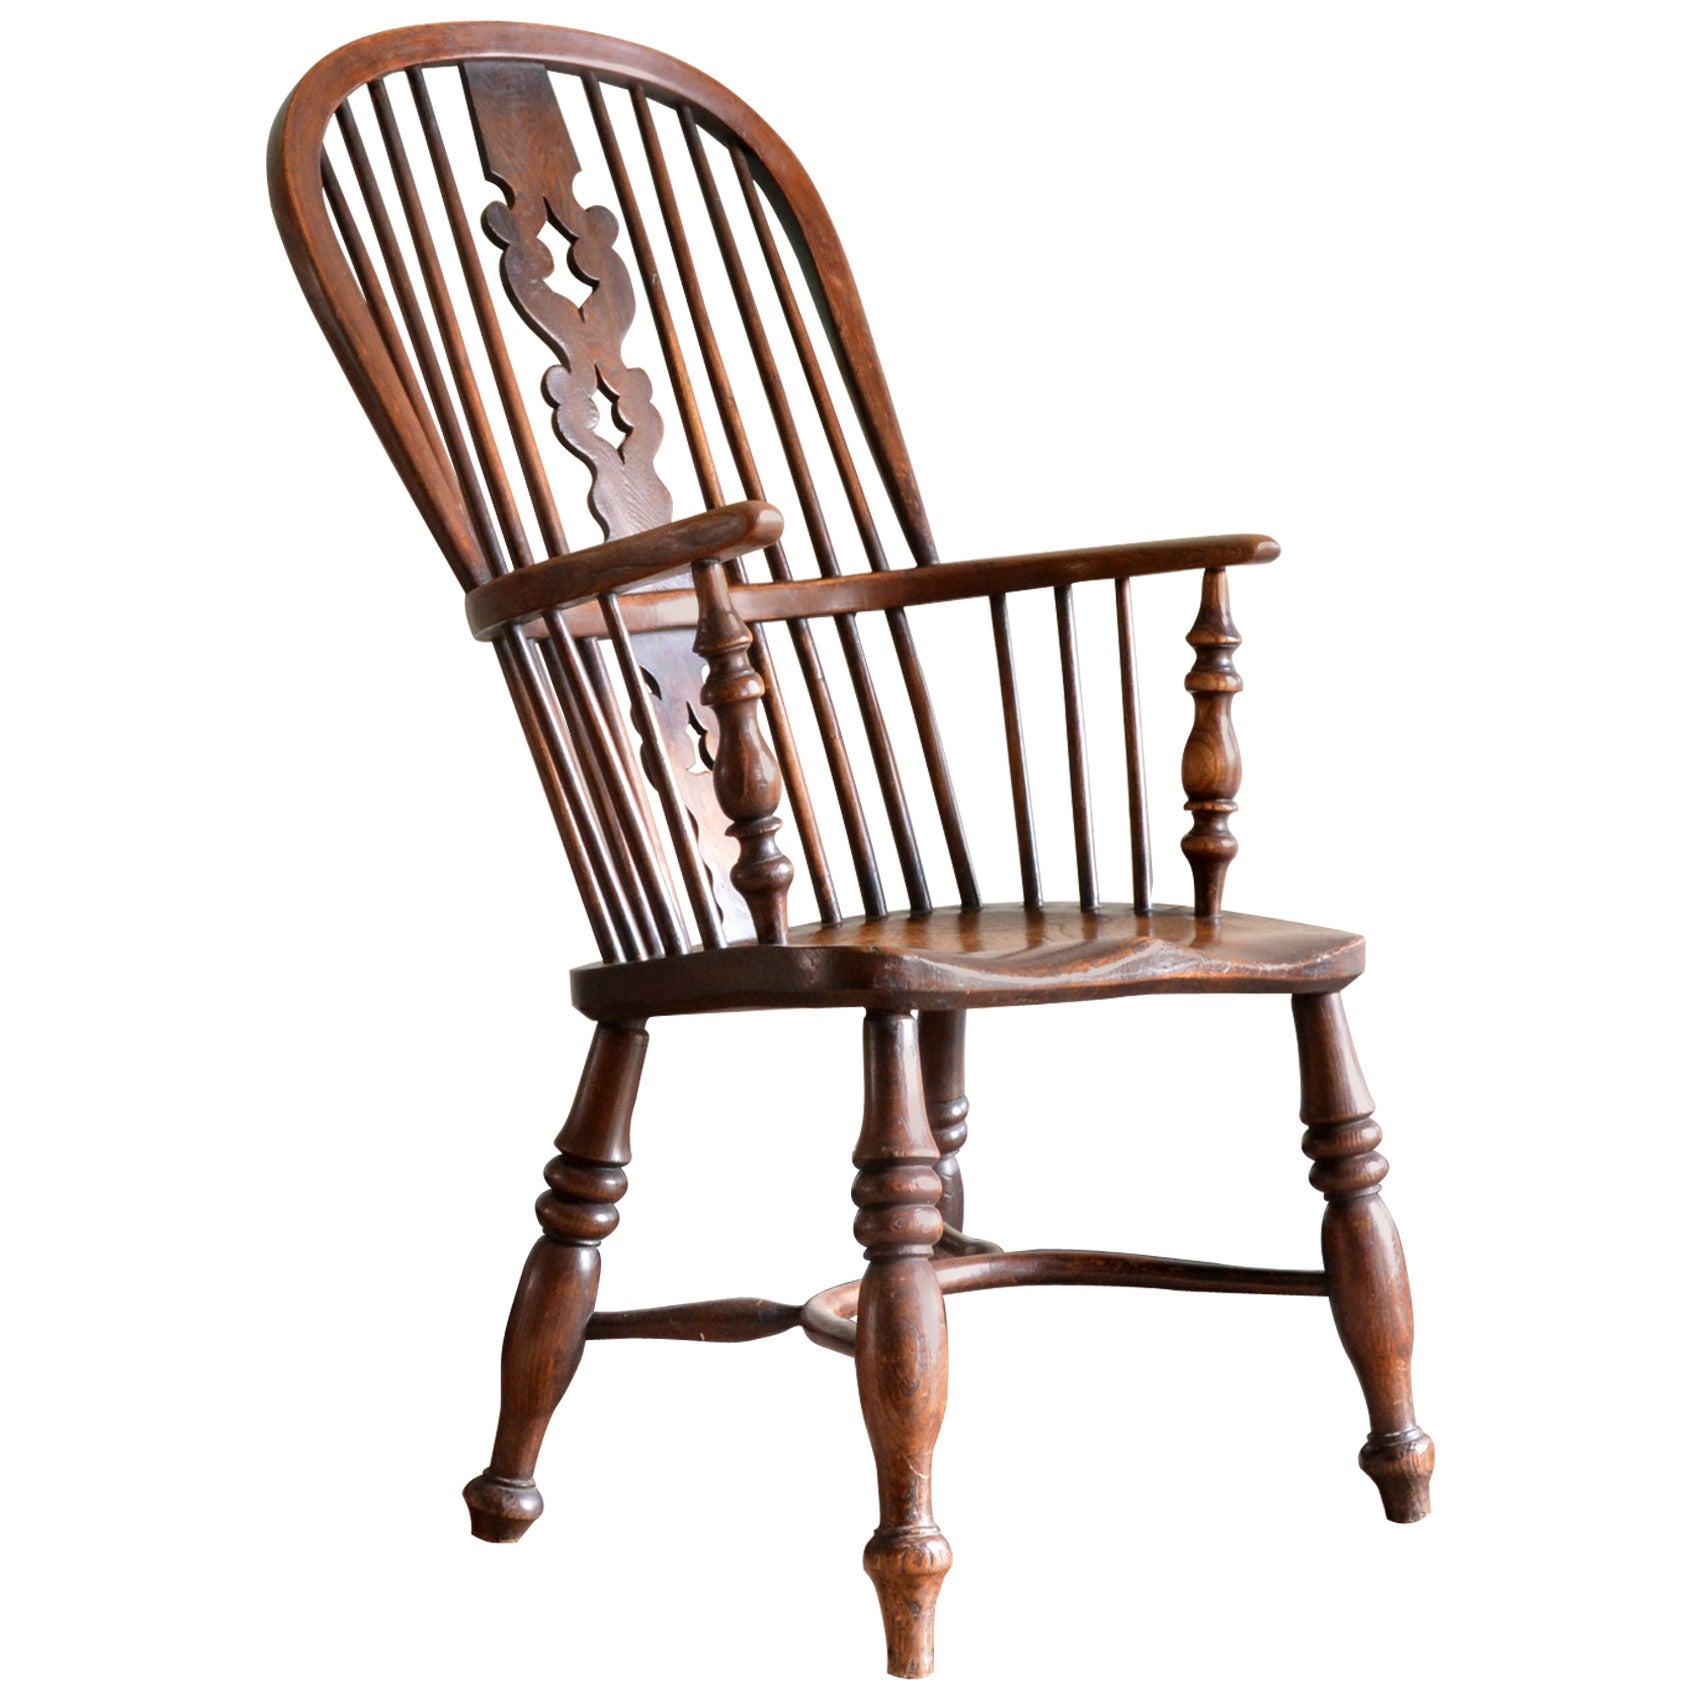 Splat-Back Windsor Chair